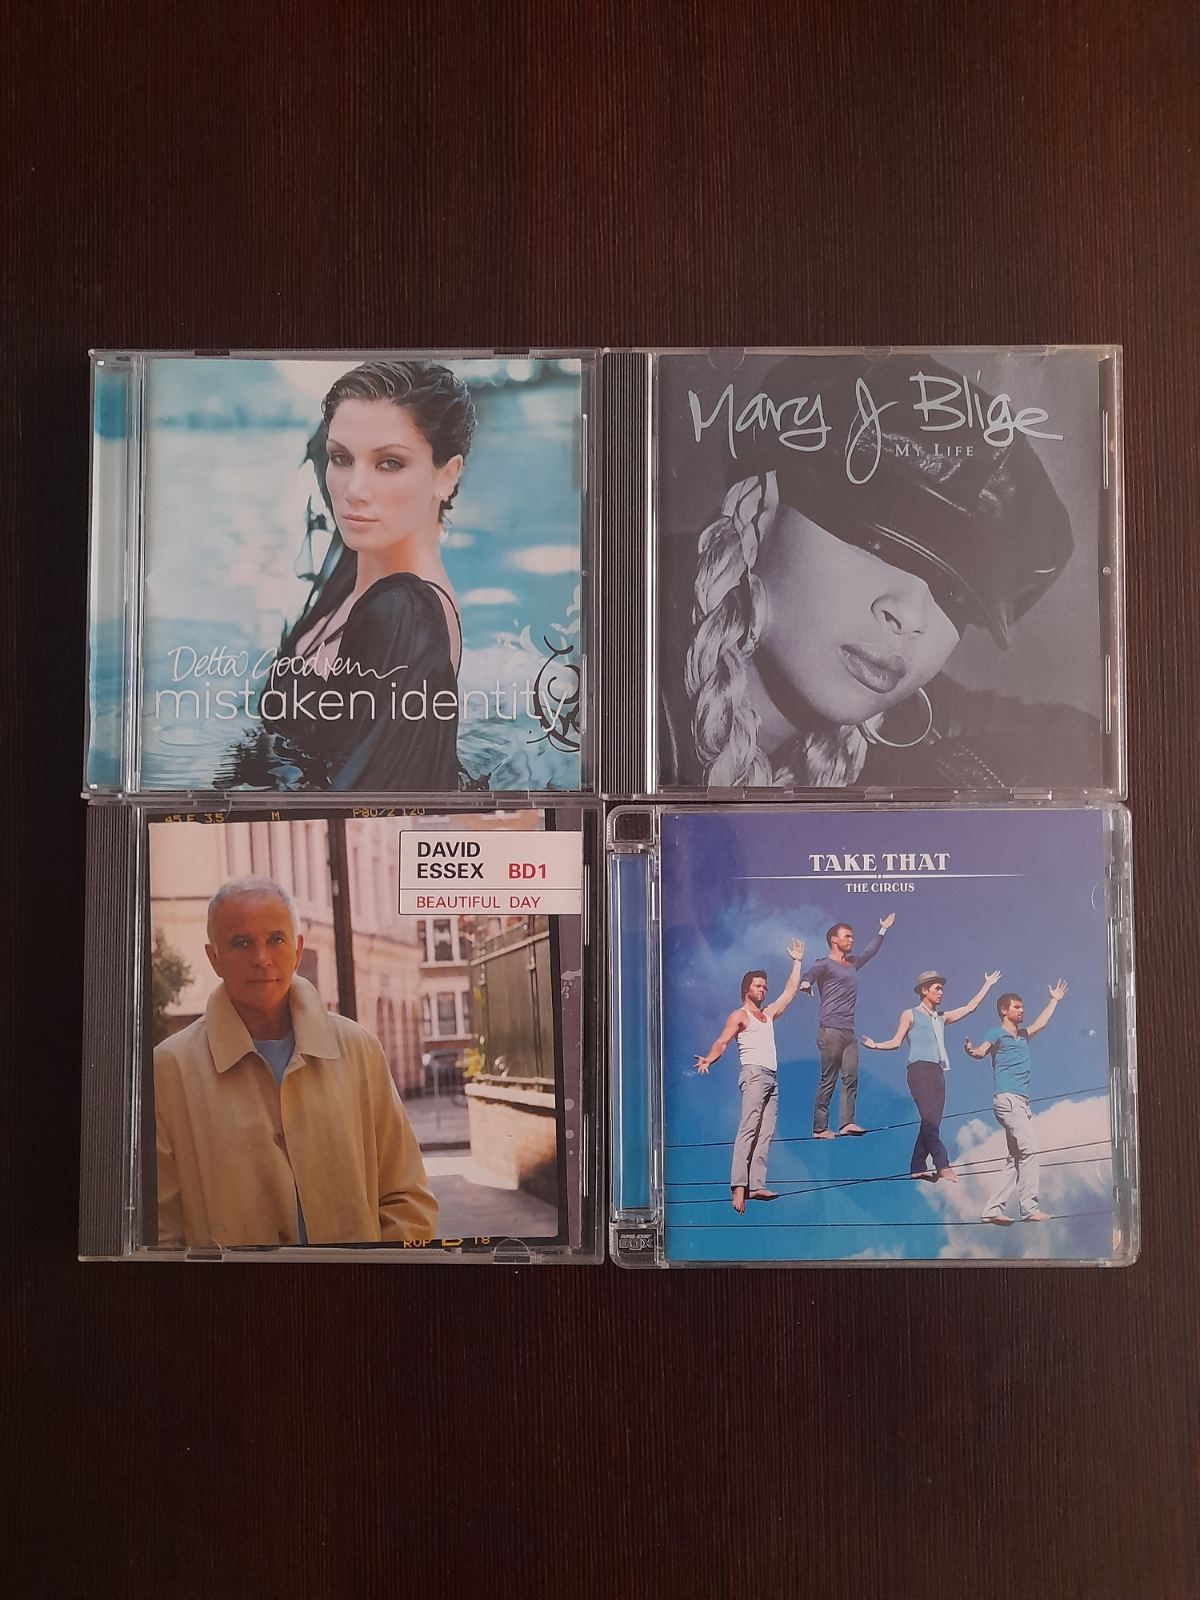 Фирменные CD диски Take That, Shania Twain, Mary G.Blige, David Essex